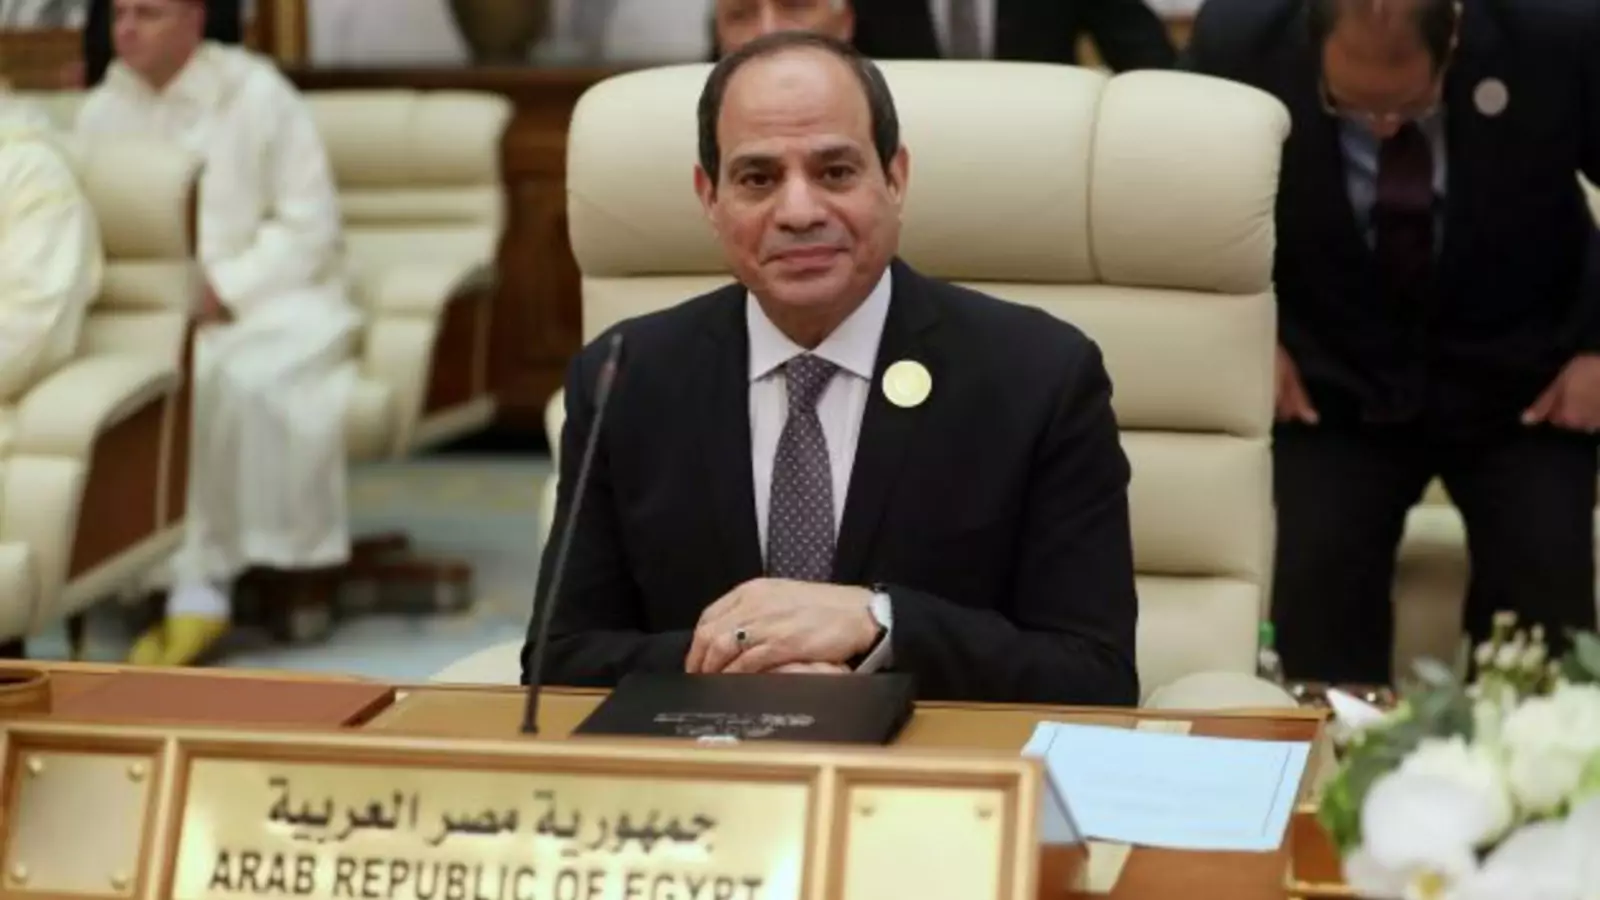 Egyptian President Abdel Fattah al-Sisi attends the Arab summit in Mecca, Saudi Arabia, May 31, 2019.